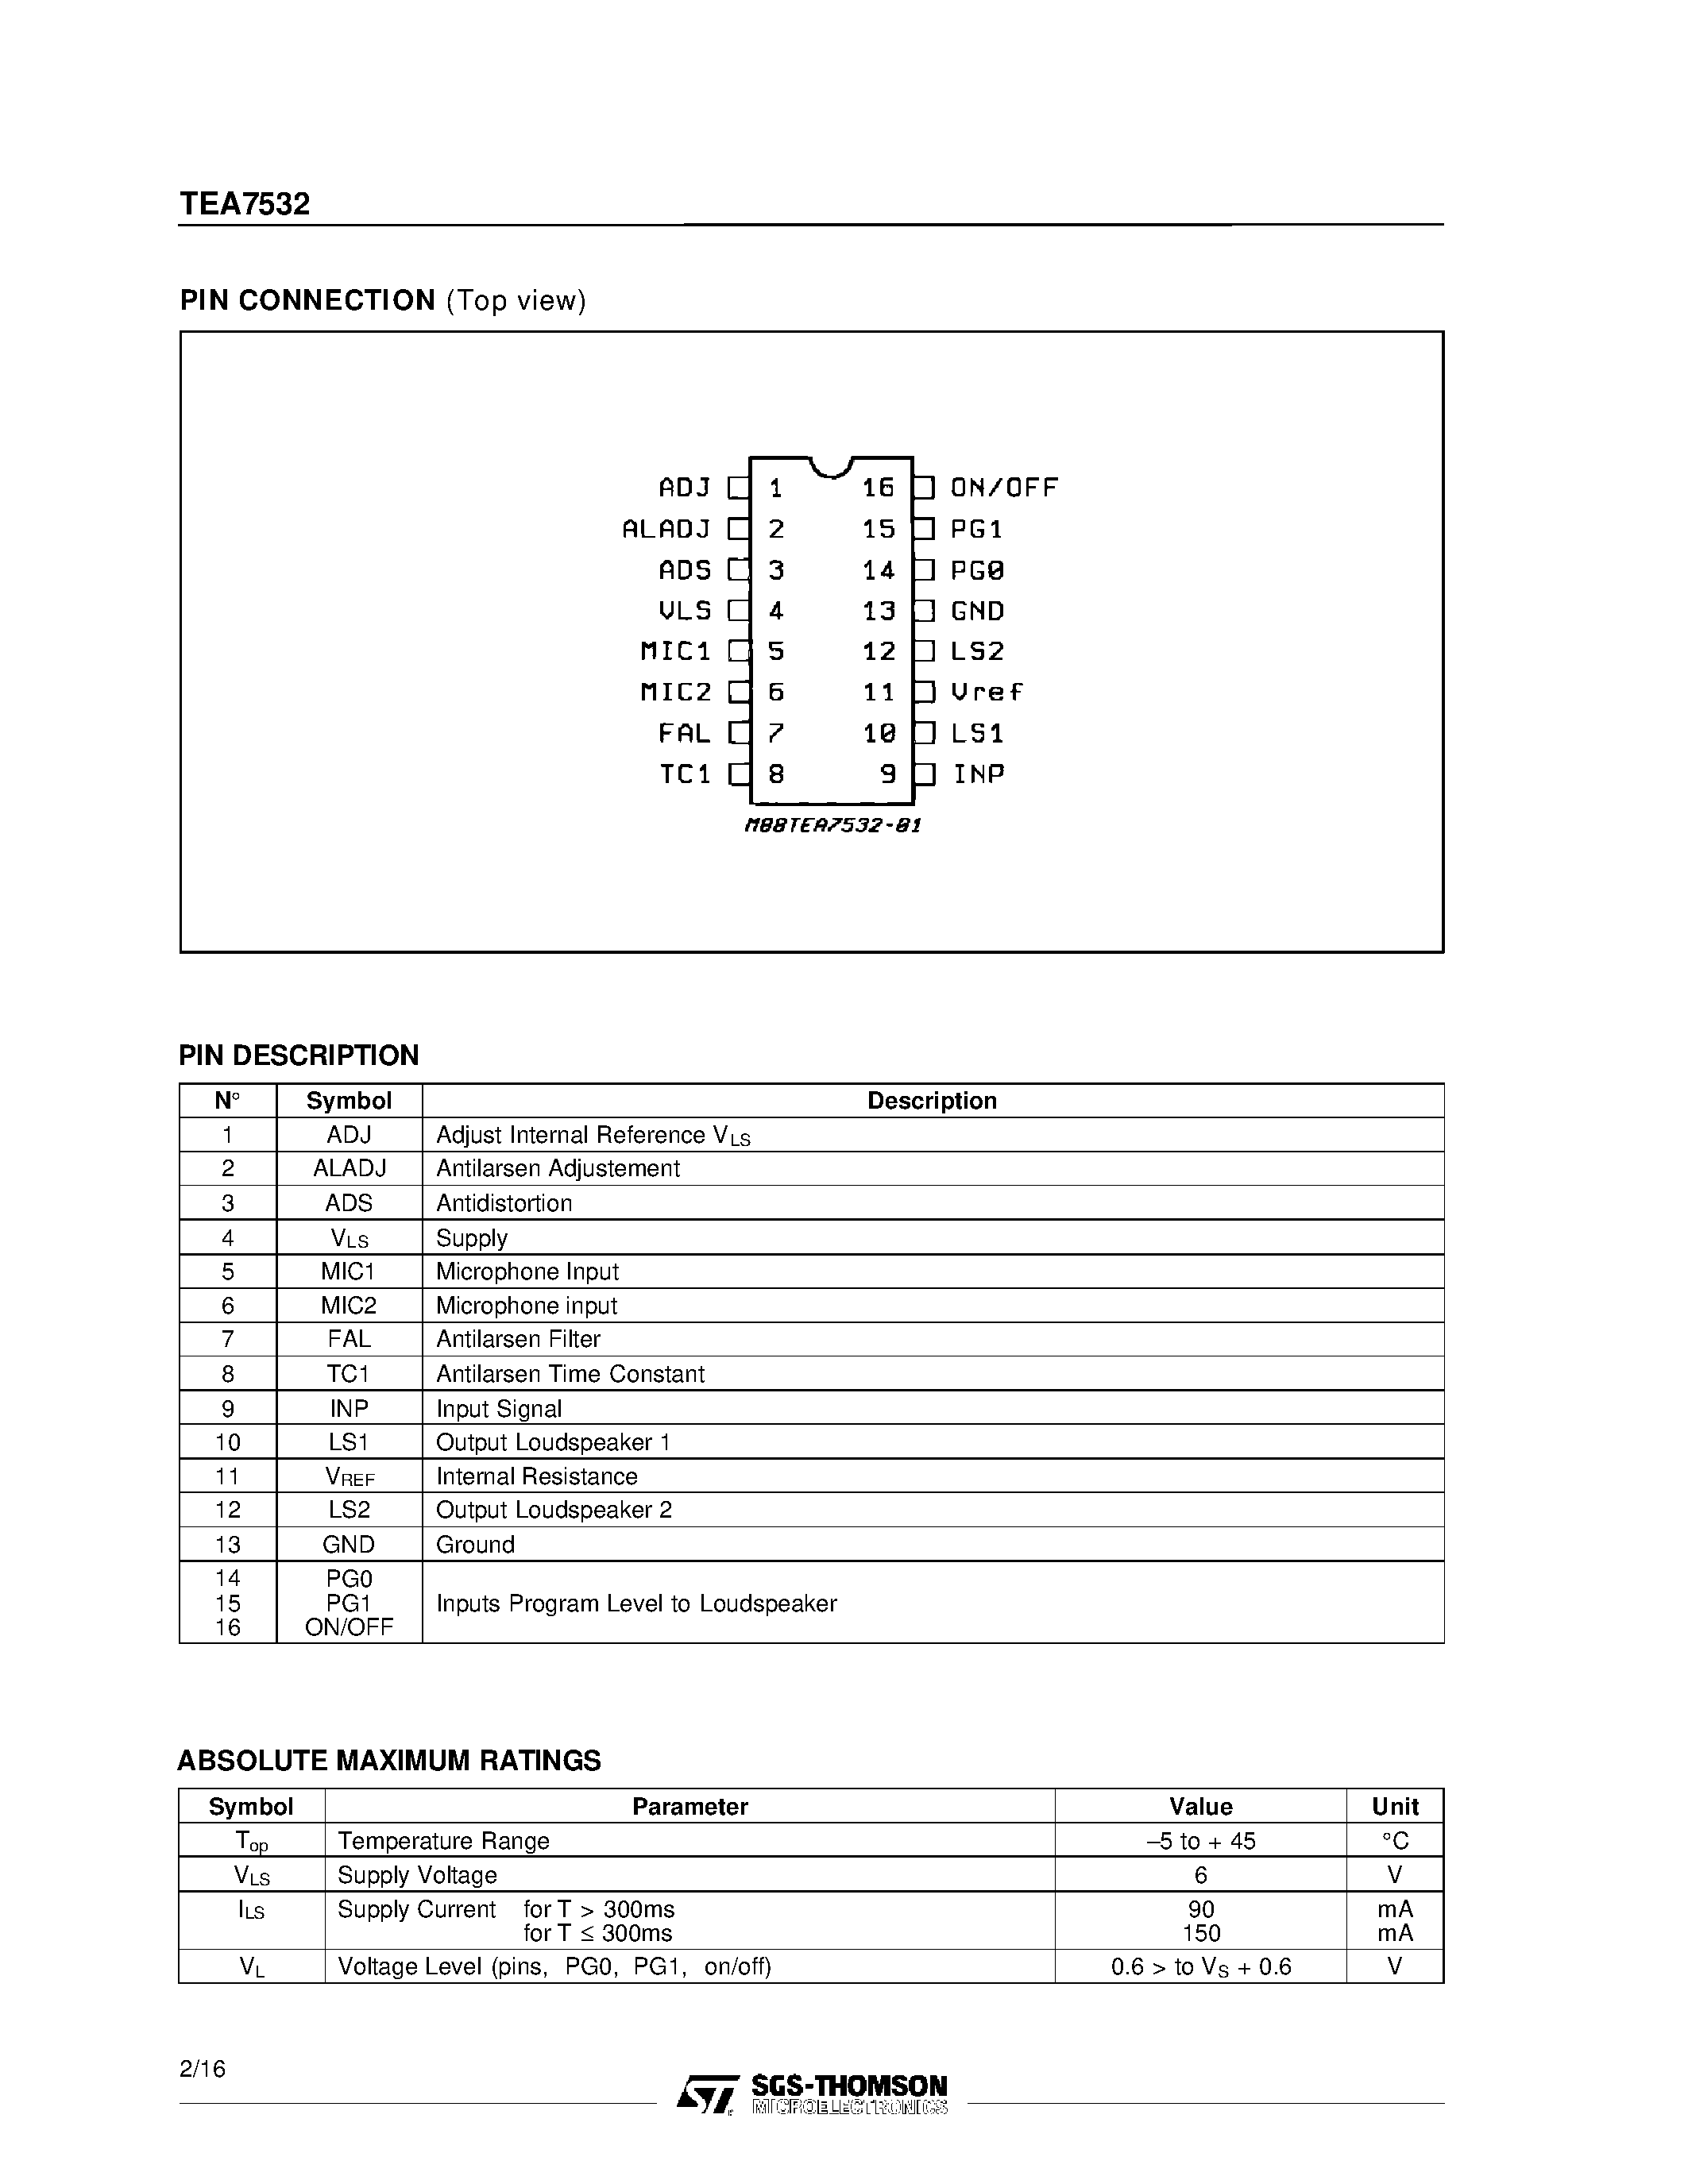 Datasheet TEA7532FP - MONITOR AMPLIFIER page 2